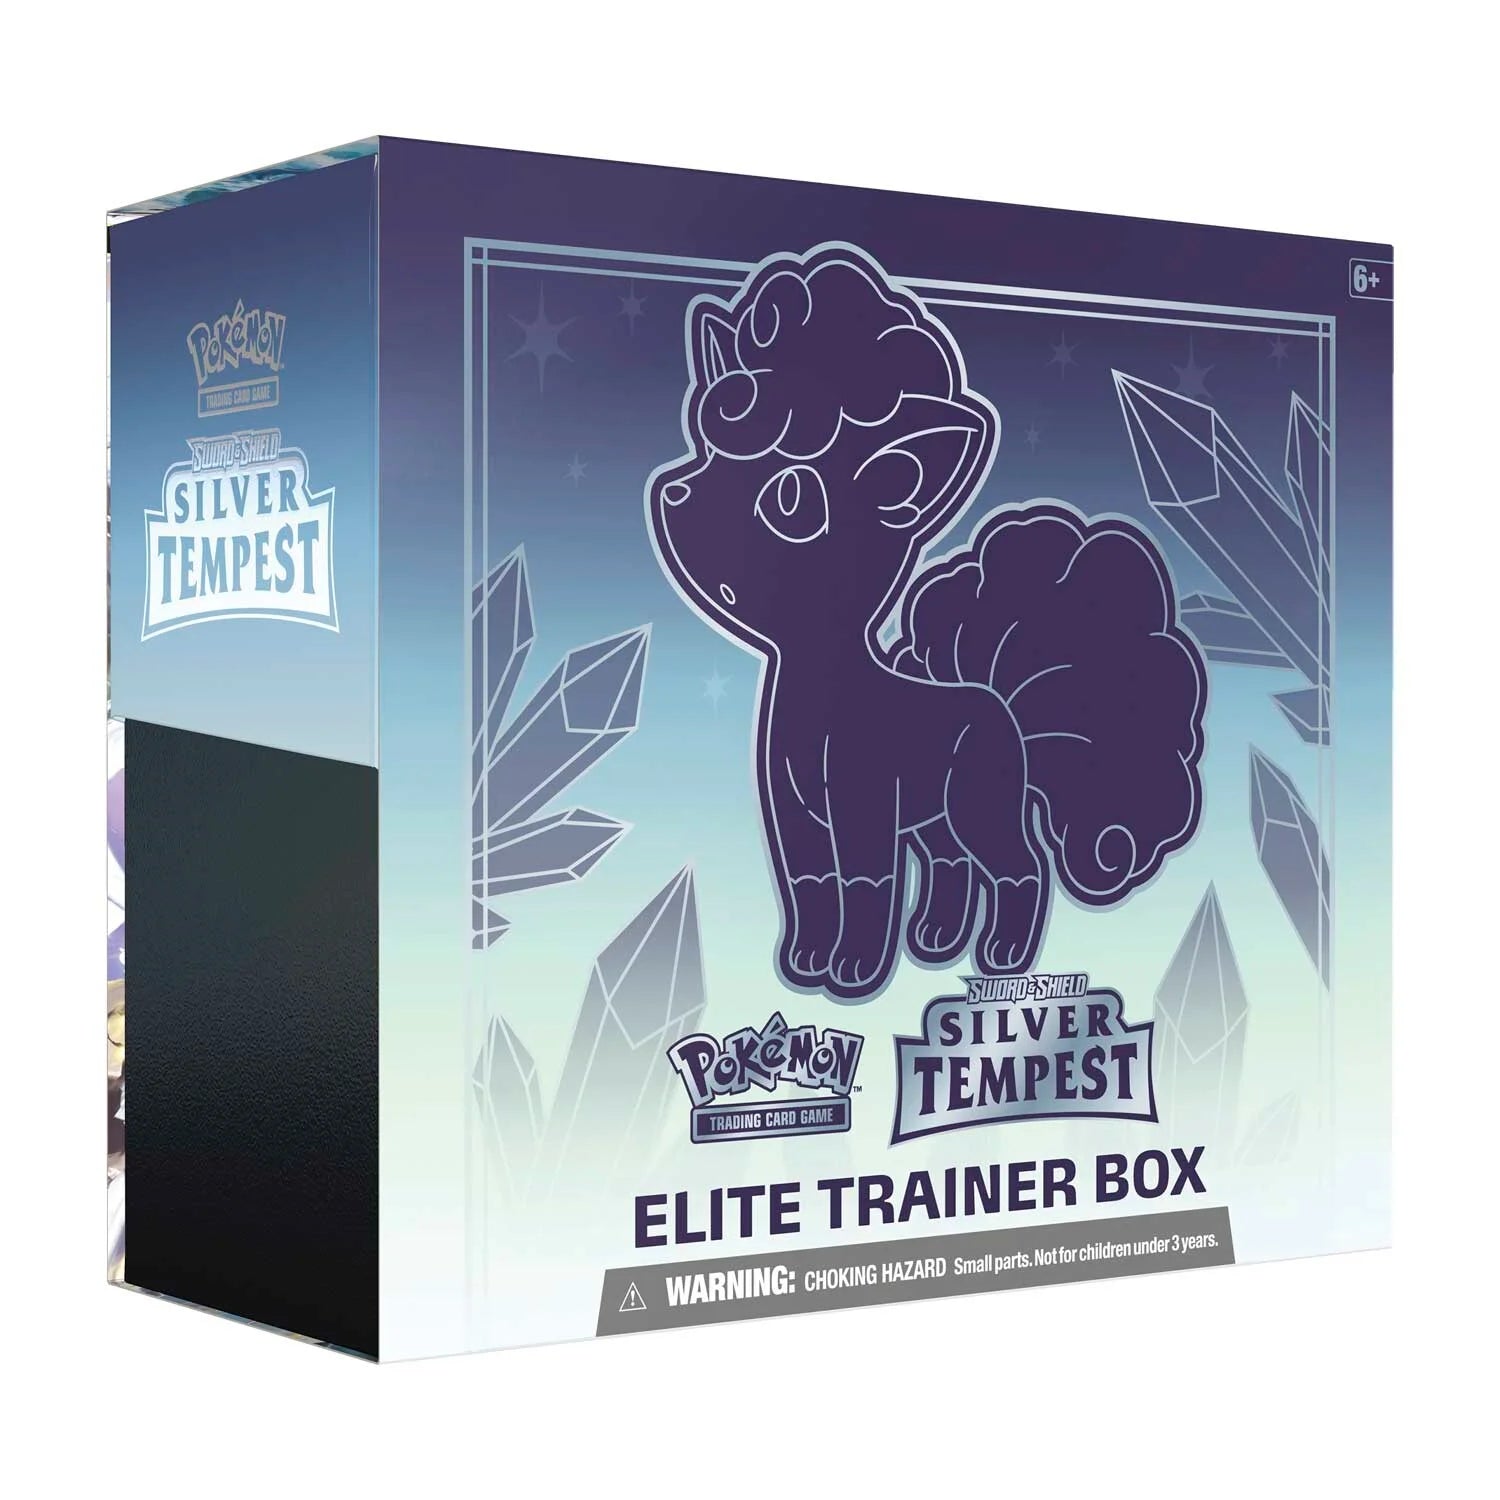 Silver Tempest Elite Trainer Boxes & Cases